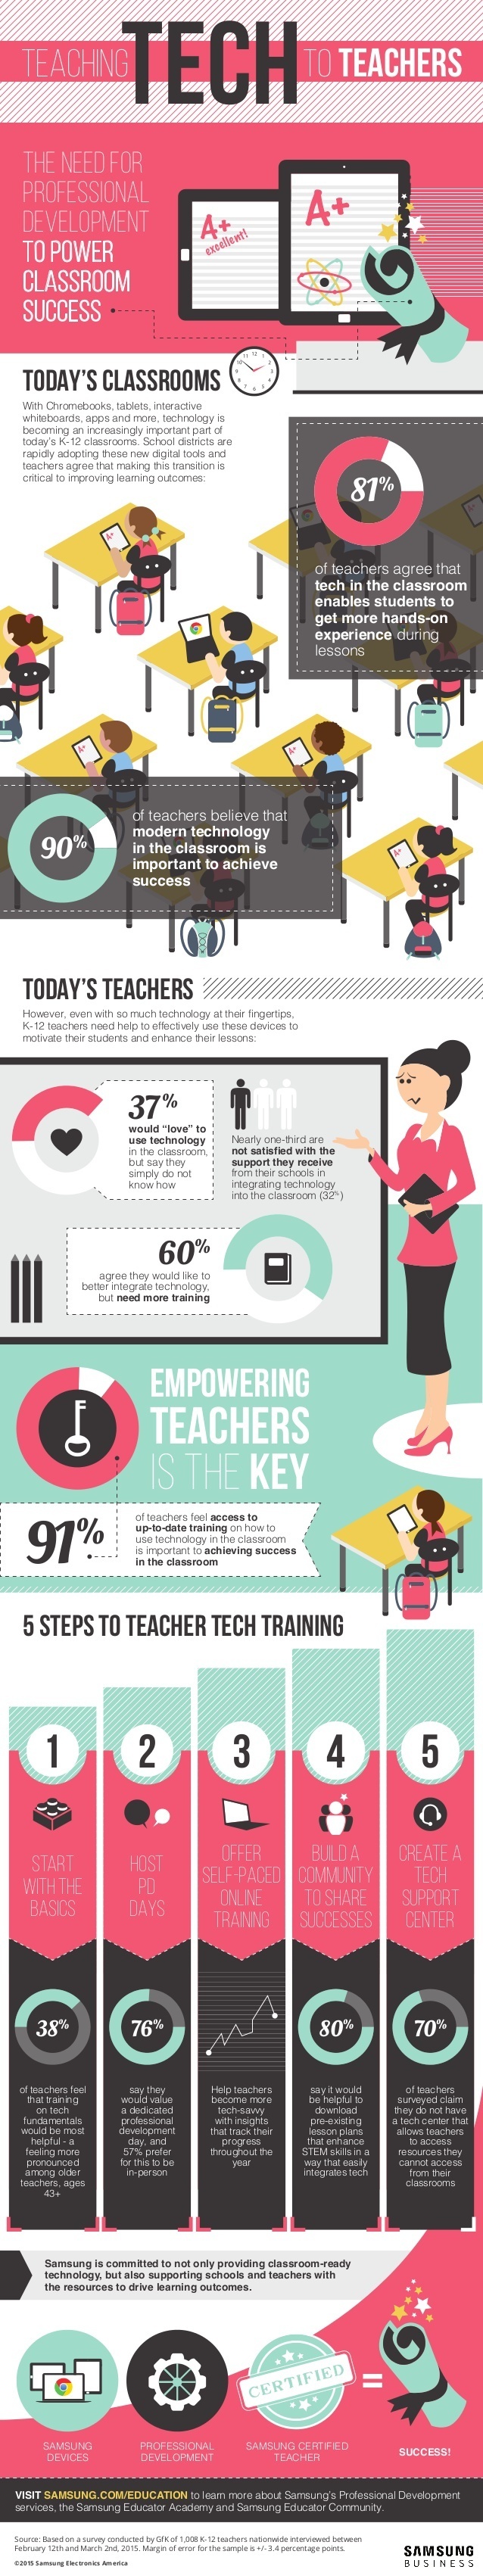 Teaching Tech to Teachers Infographic